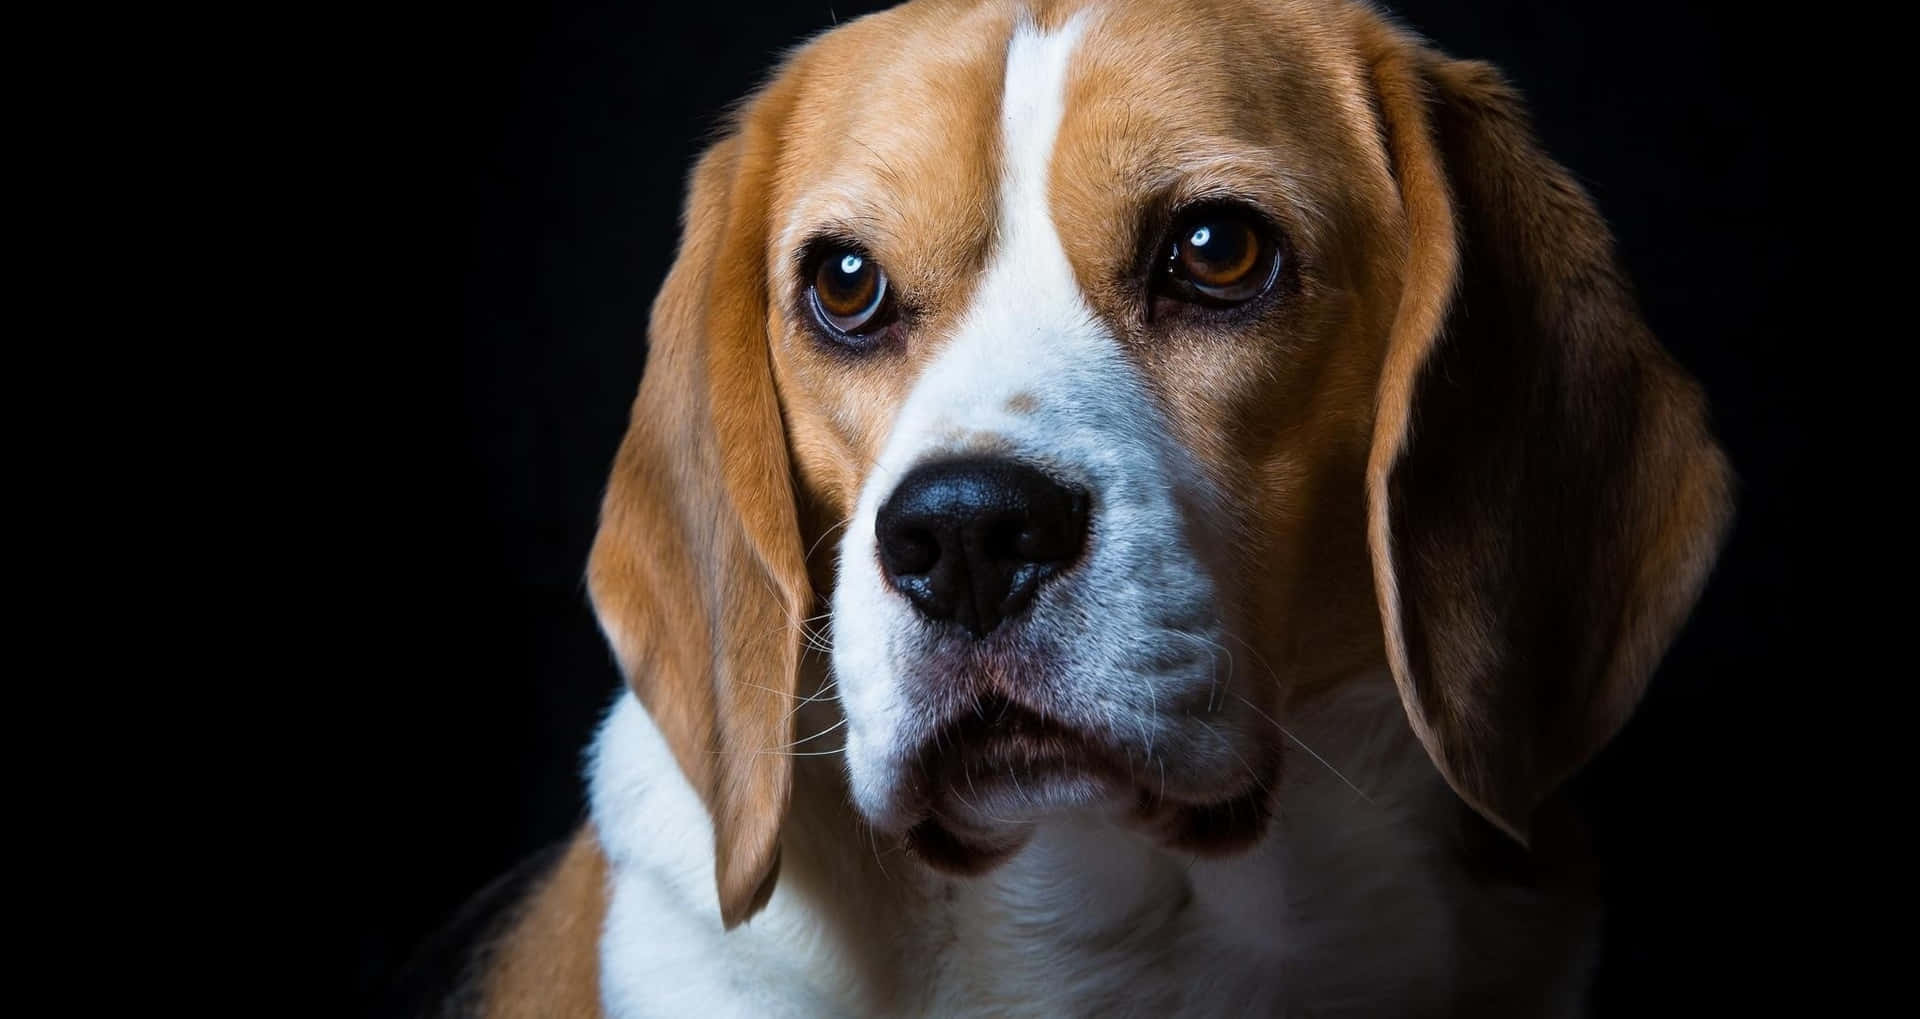 "a Lonely Canine Companion: Portrait Of A Sad Dog" Wallpaper